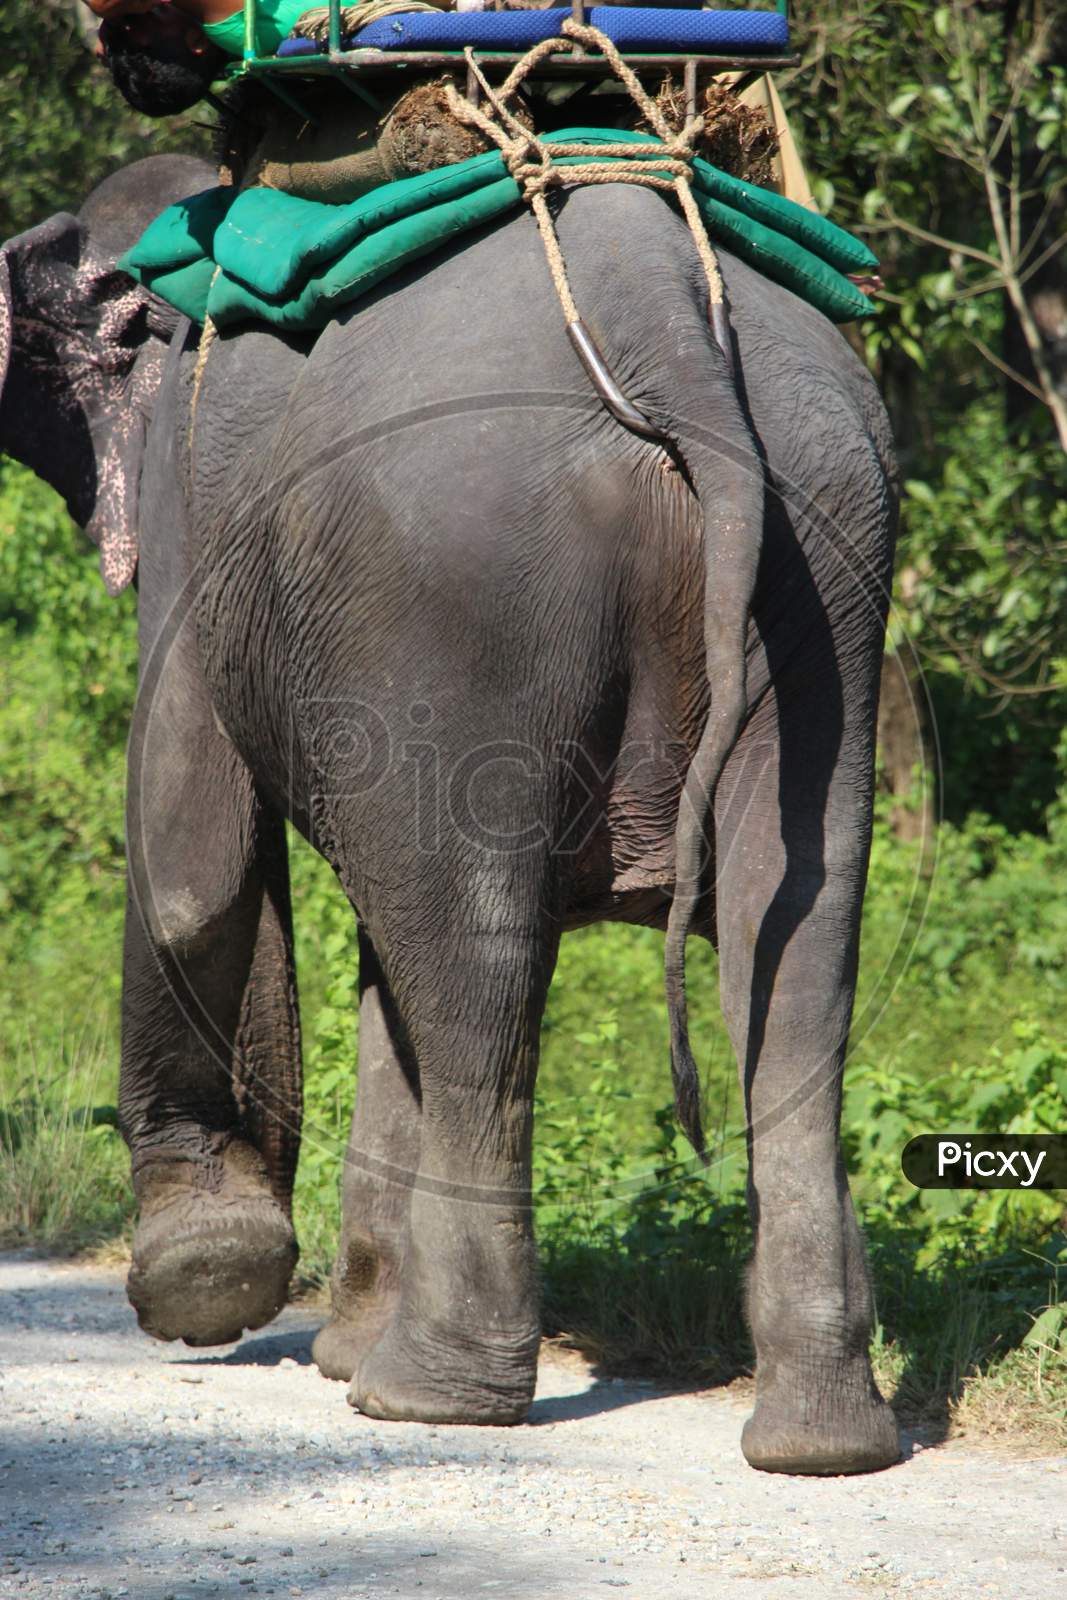 An Elephant walking on the Path